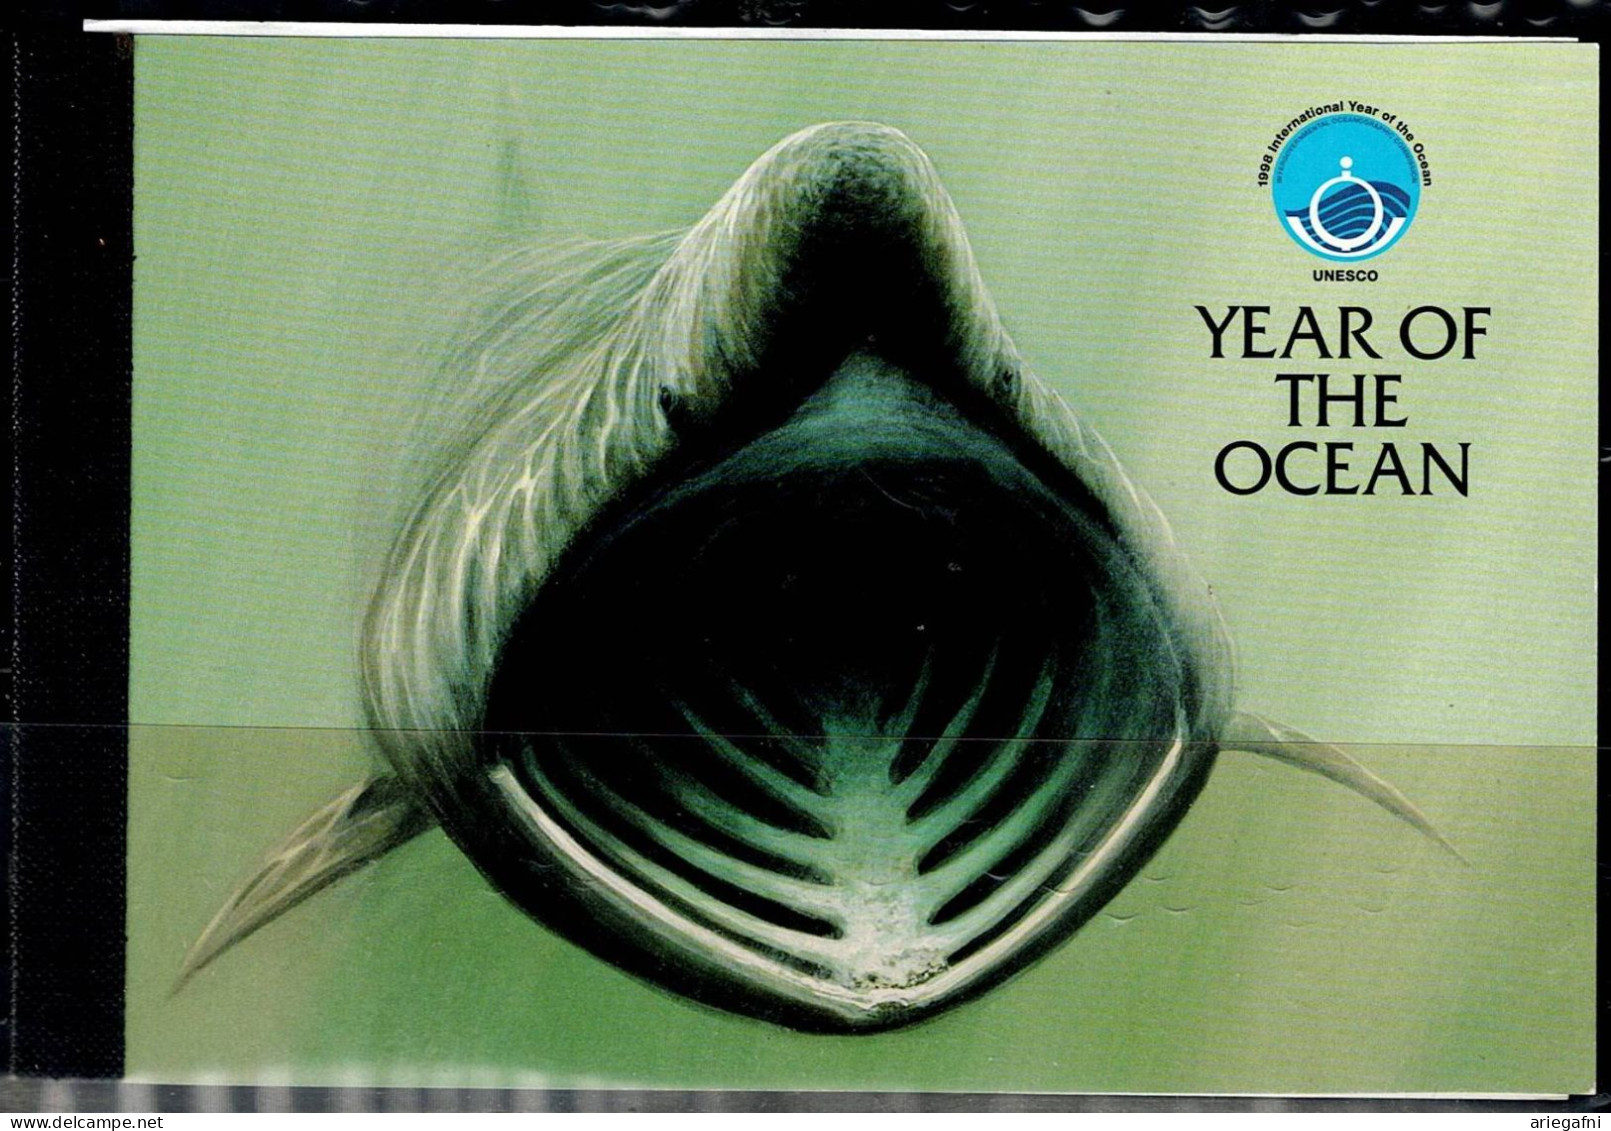 ISLE OF MAN 1998 UNESCO INTERNATIONAL YEAR OF THE OCEAN BOOKLET MNH VF!! - Isle Of Man